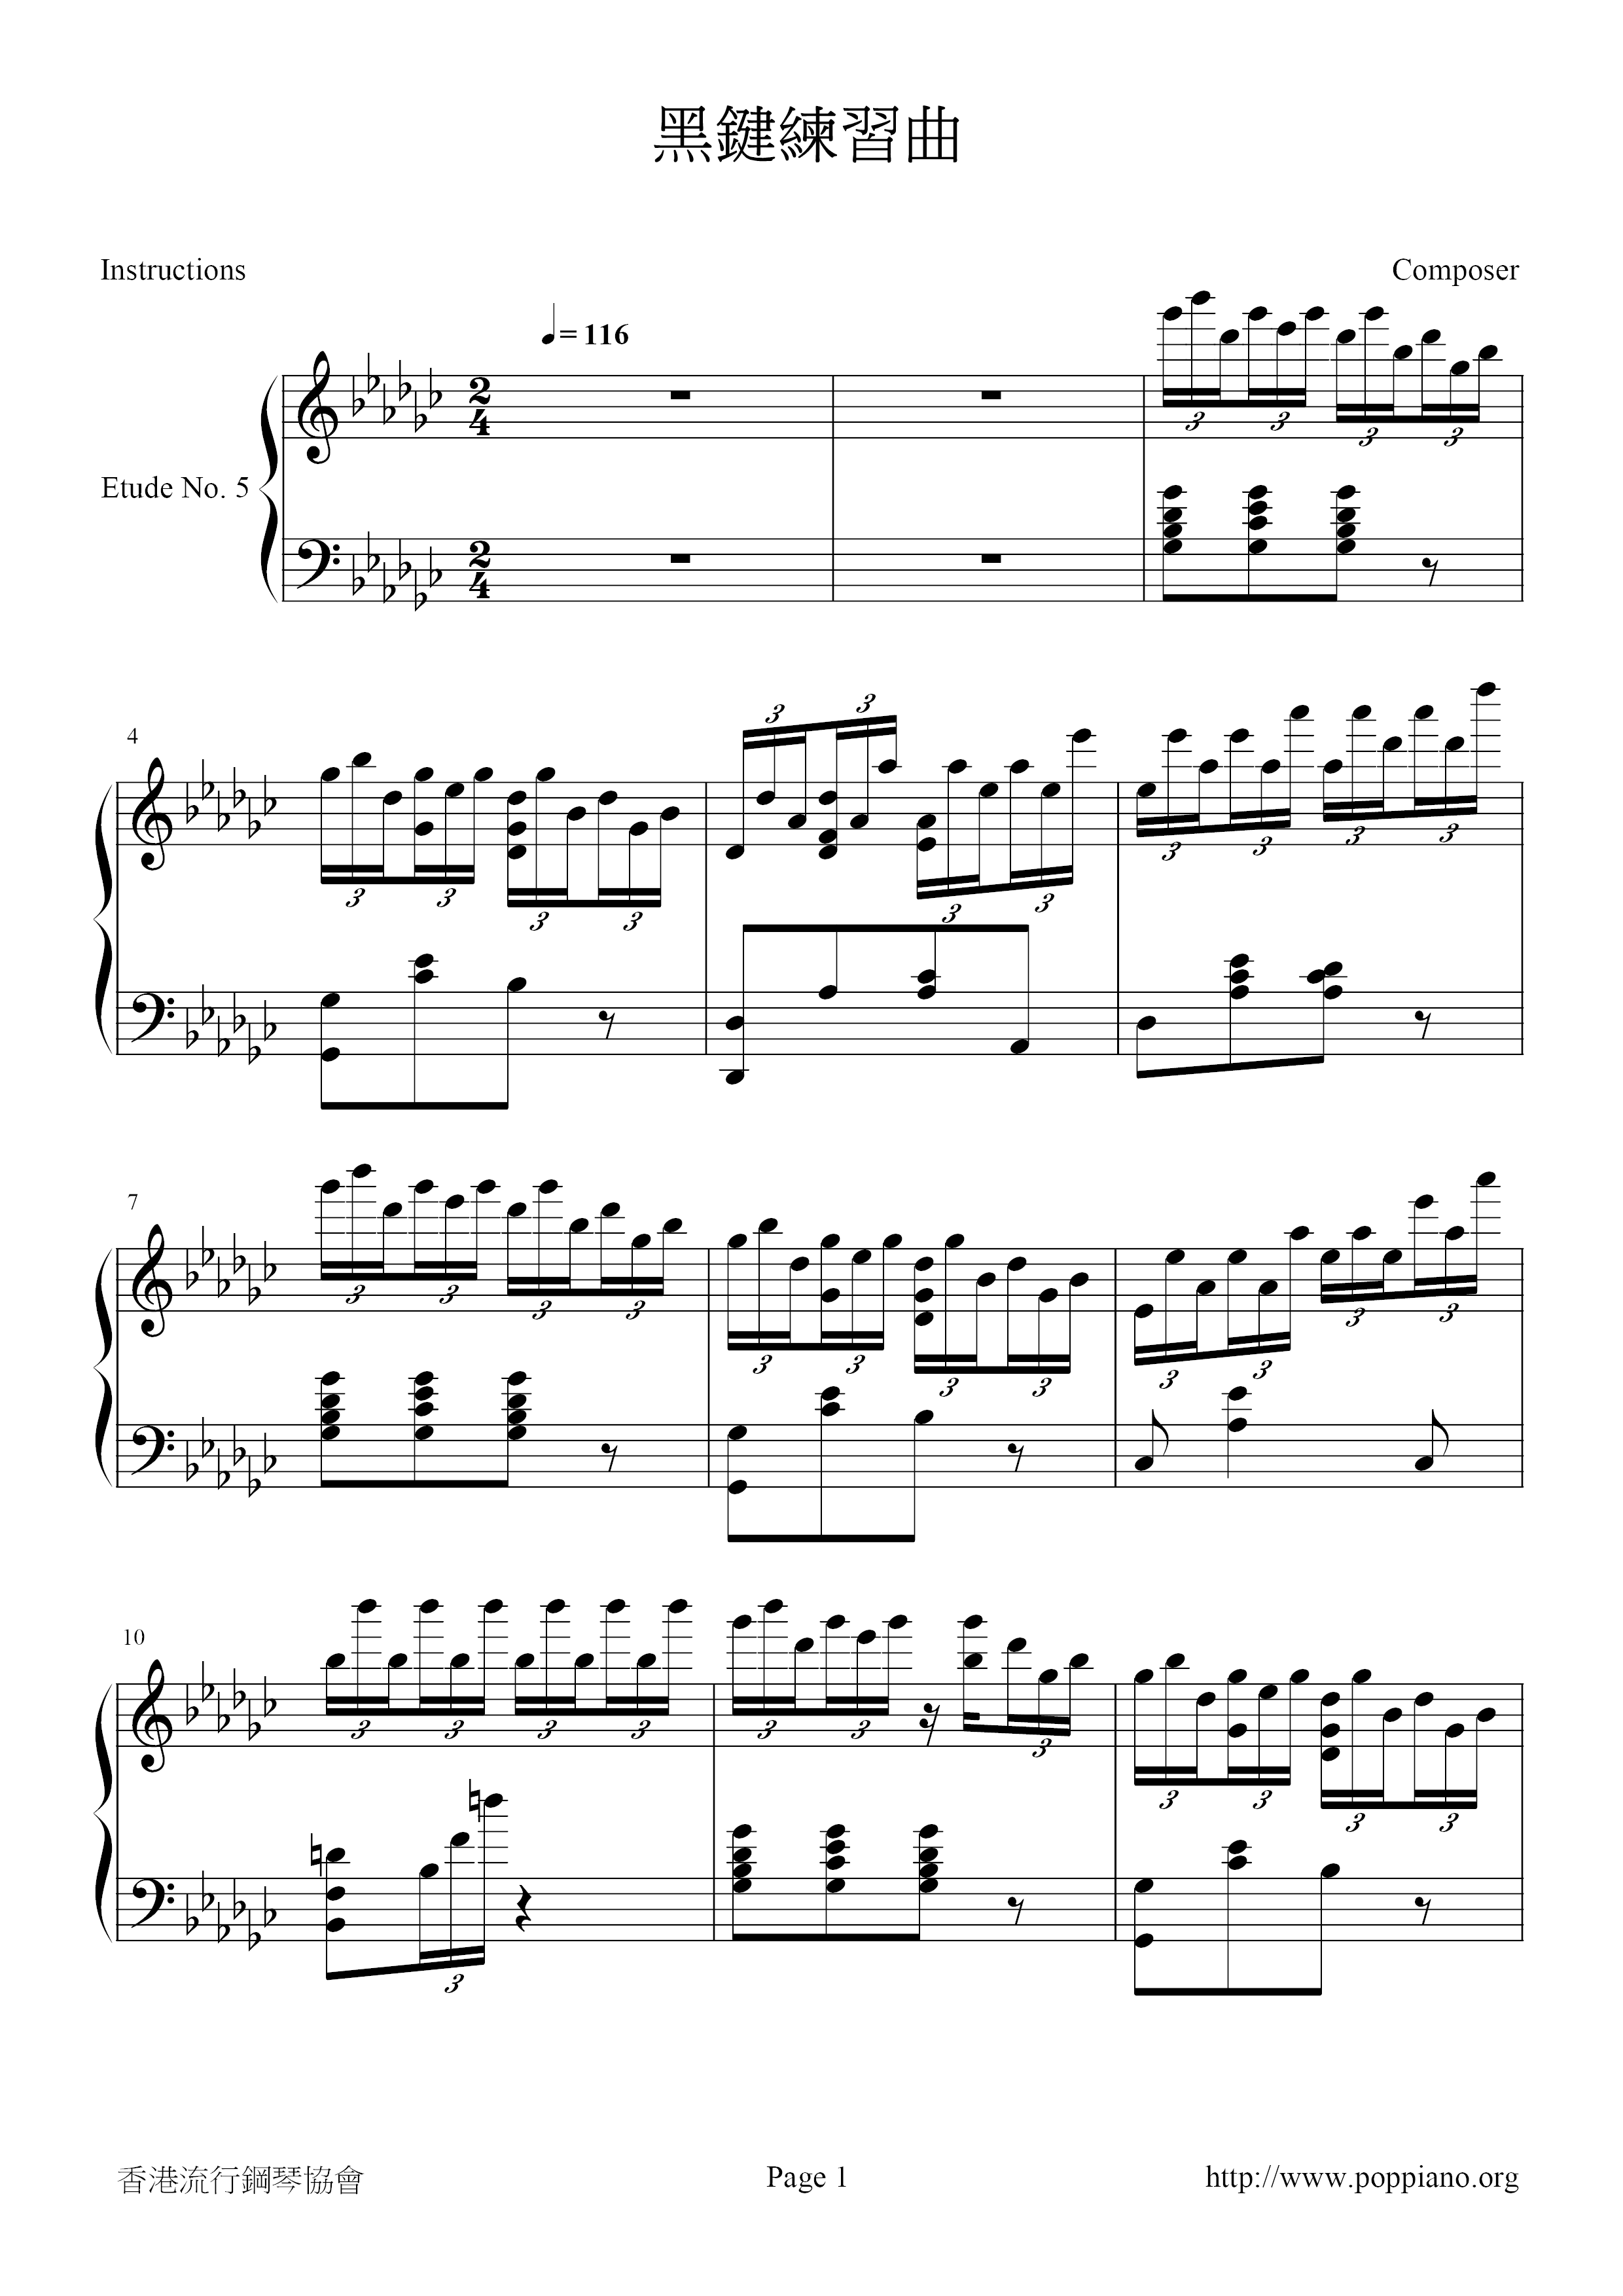 Secret - Piano Battle 1 Score